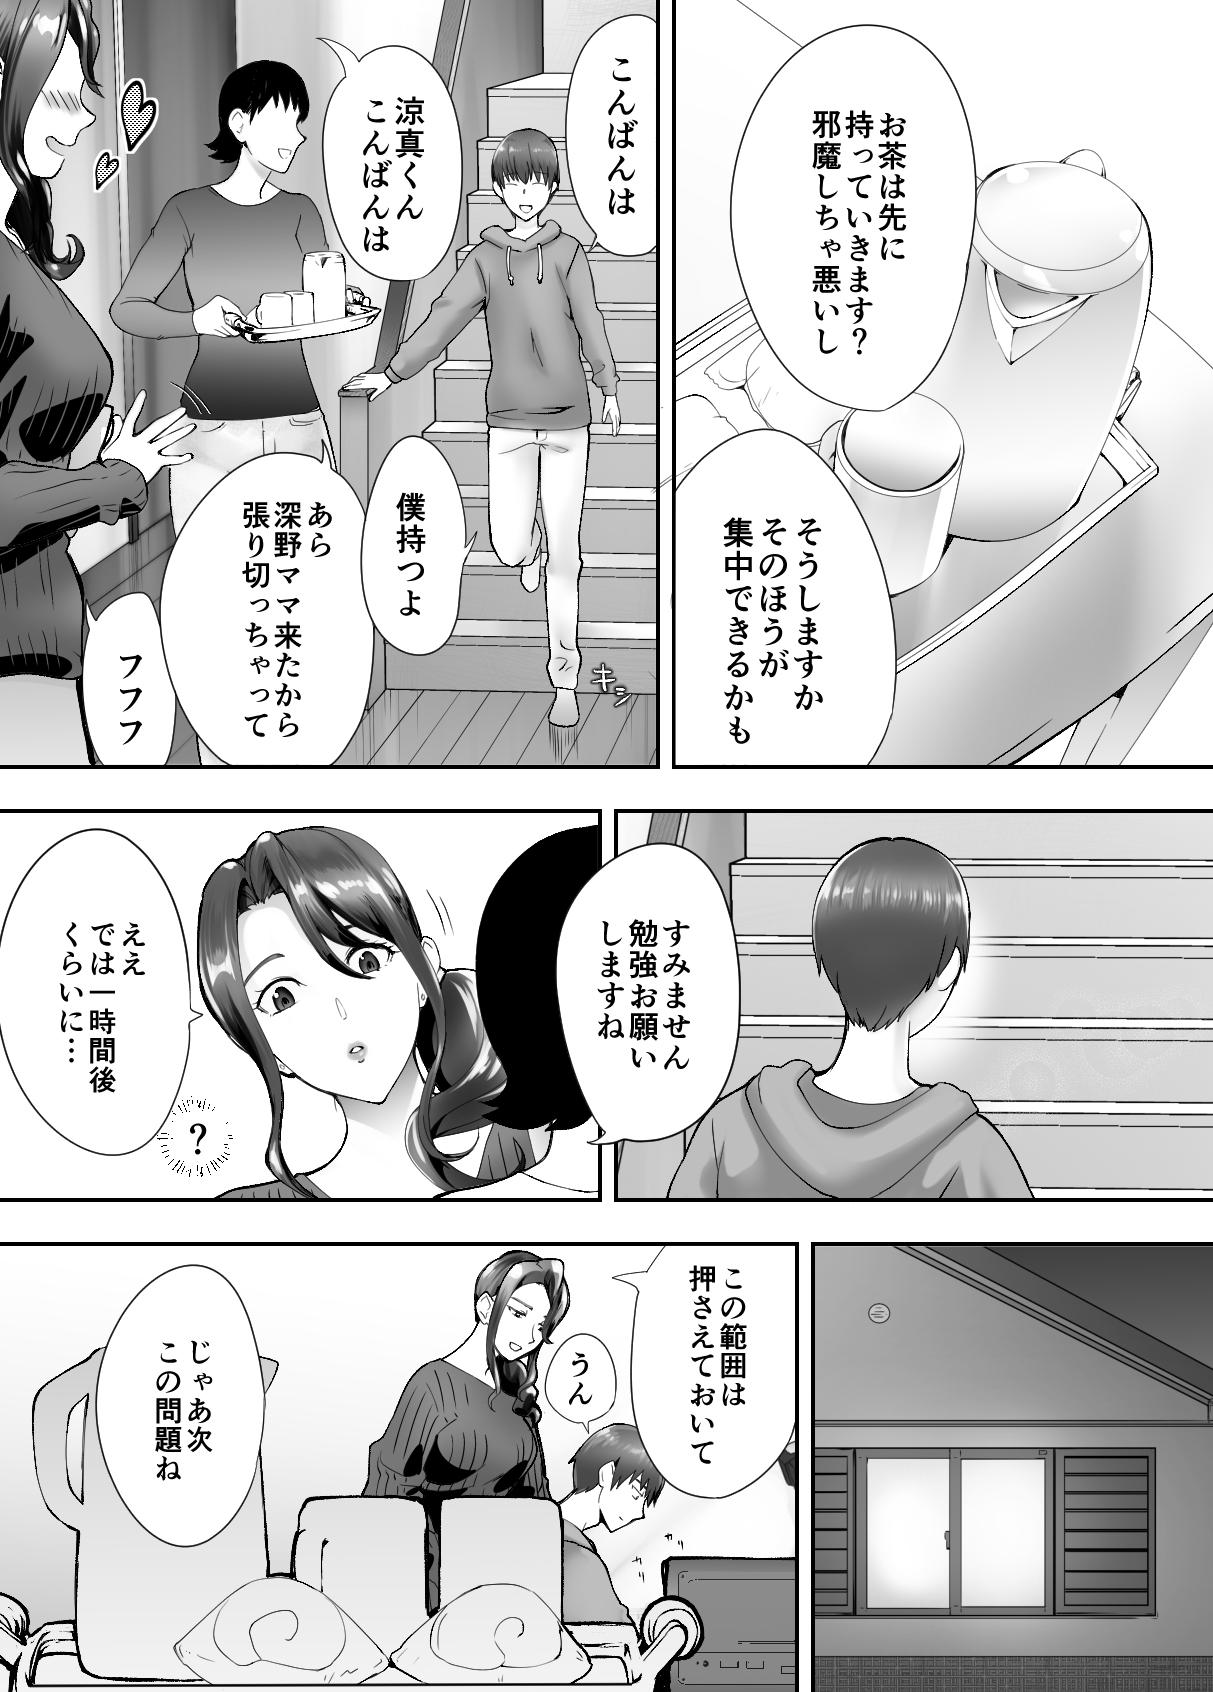 Dress Osananajimi ga Mama to Yatte Imasu. 4 - Original Brother Sister - Page 3